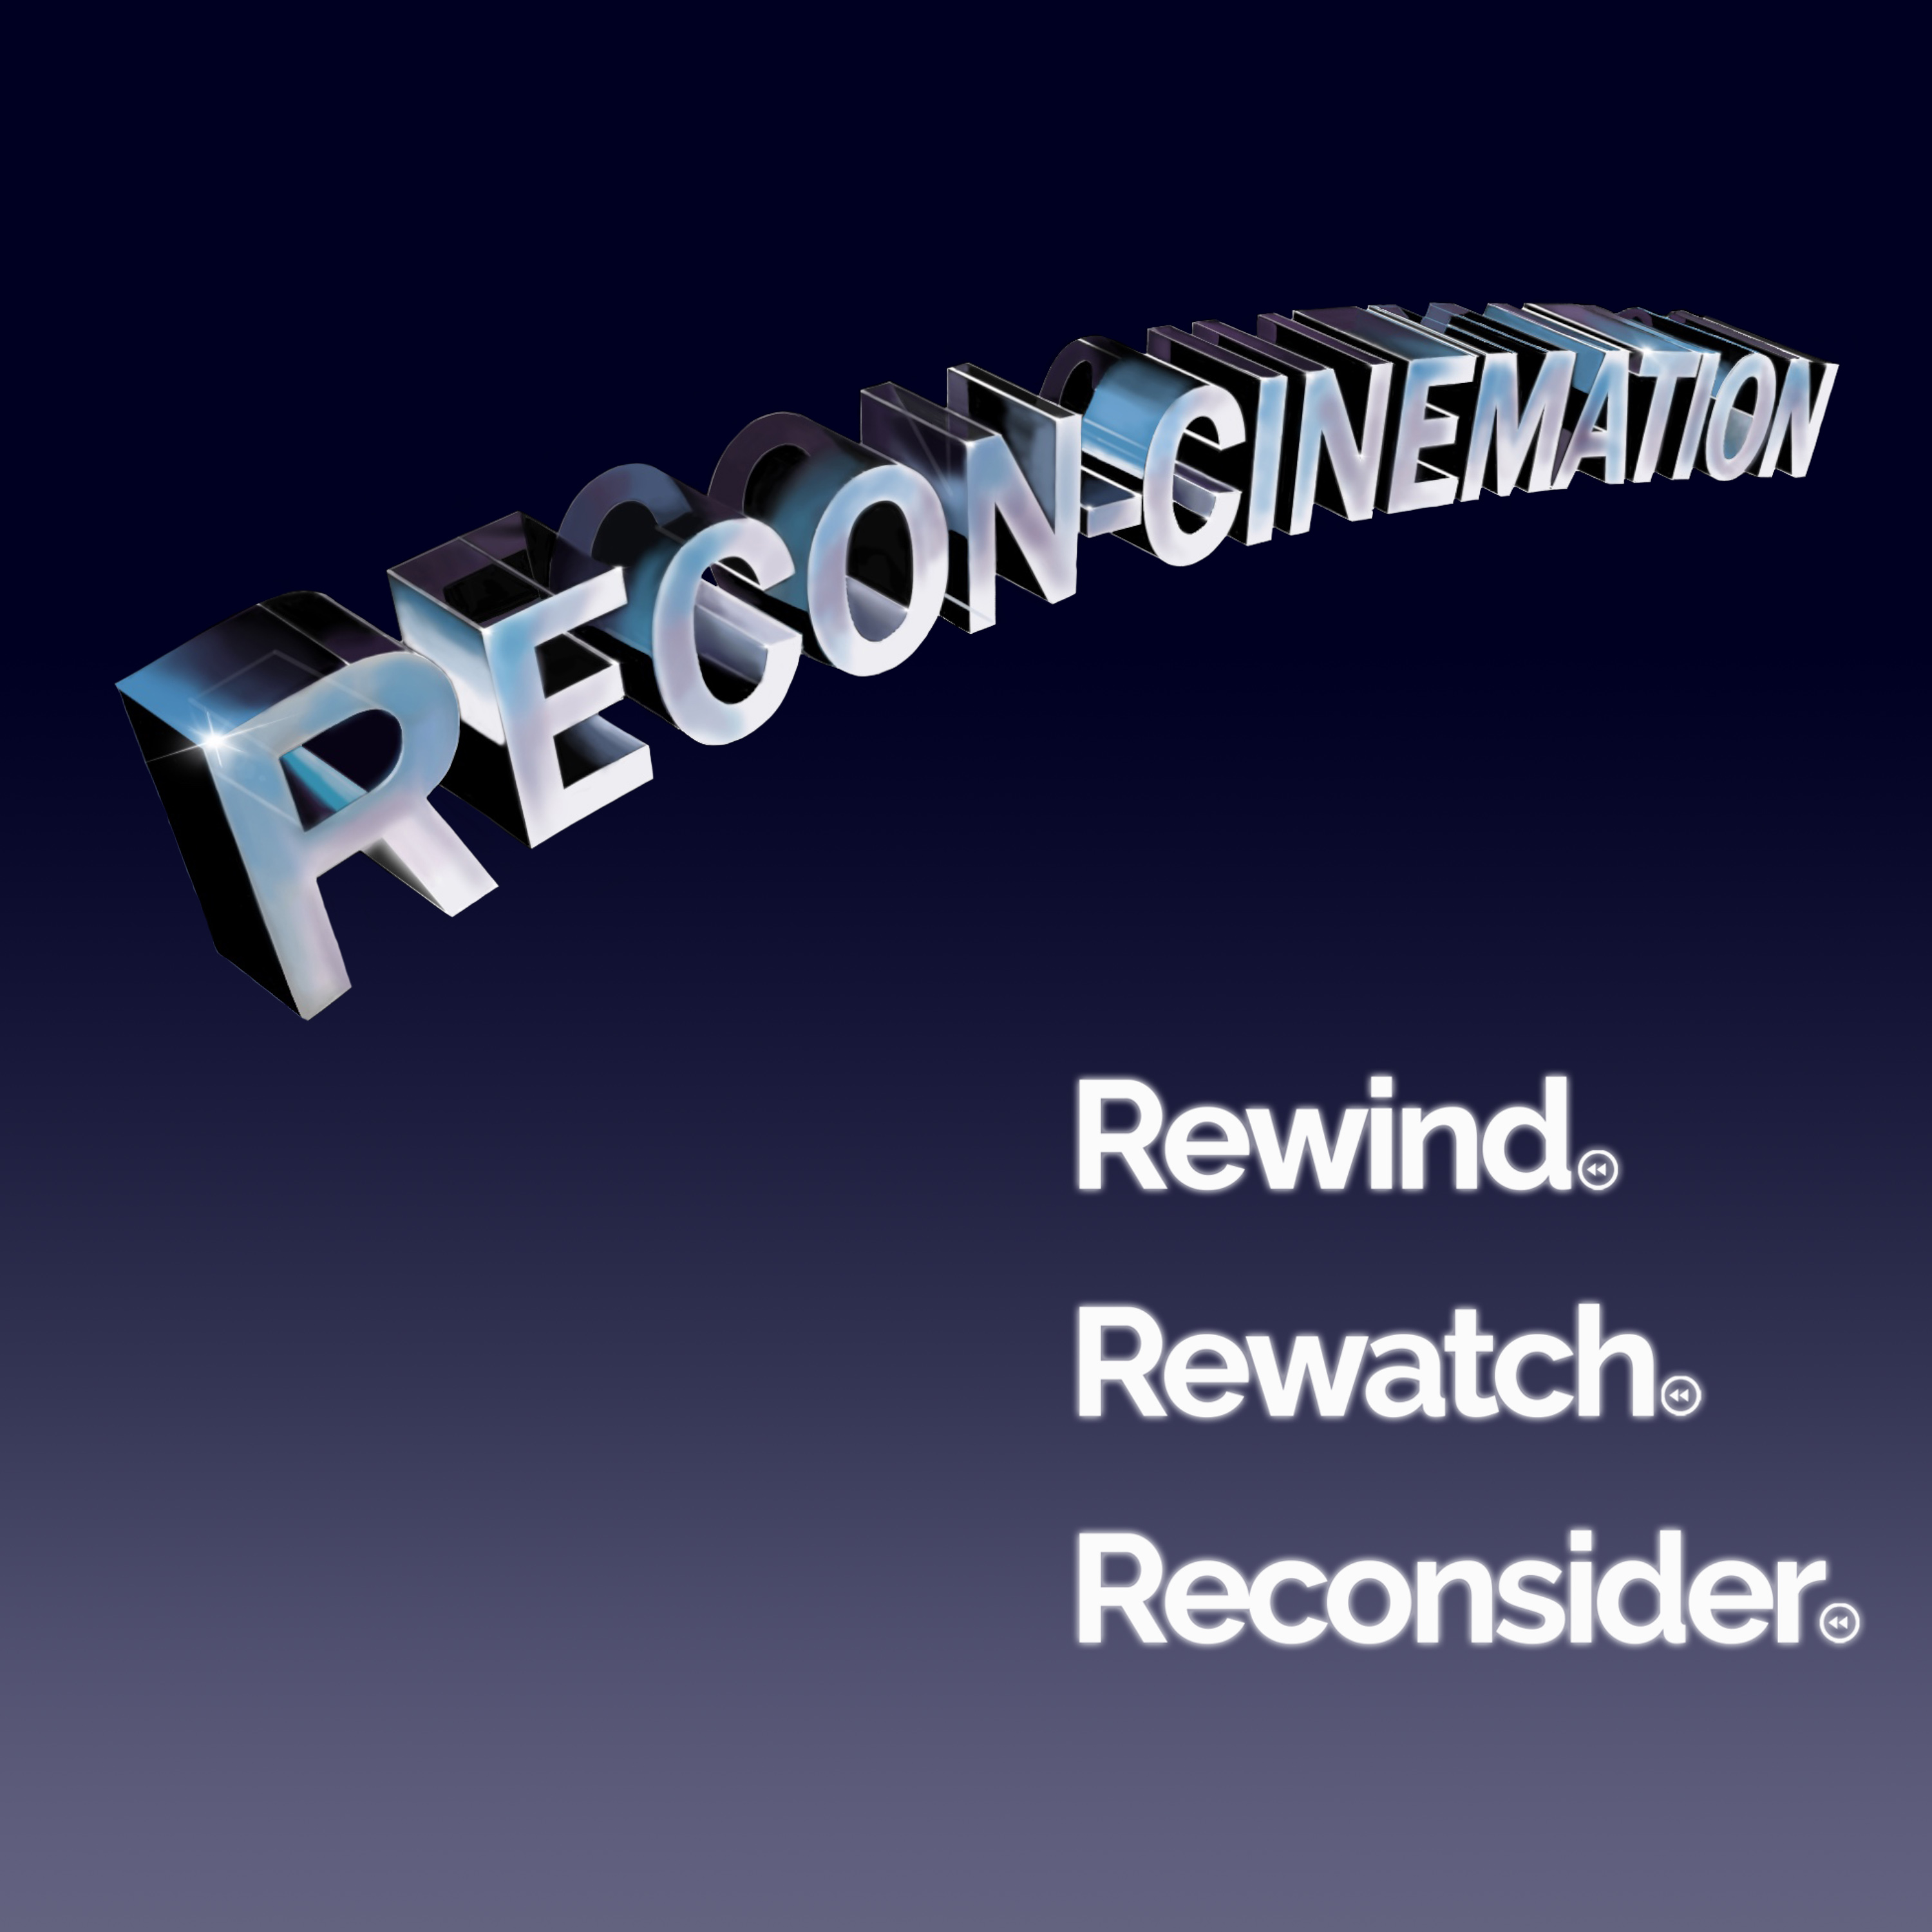 Recon-Cinemation Starts June 25!